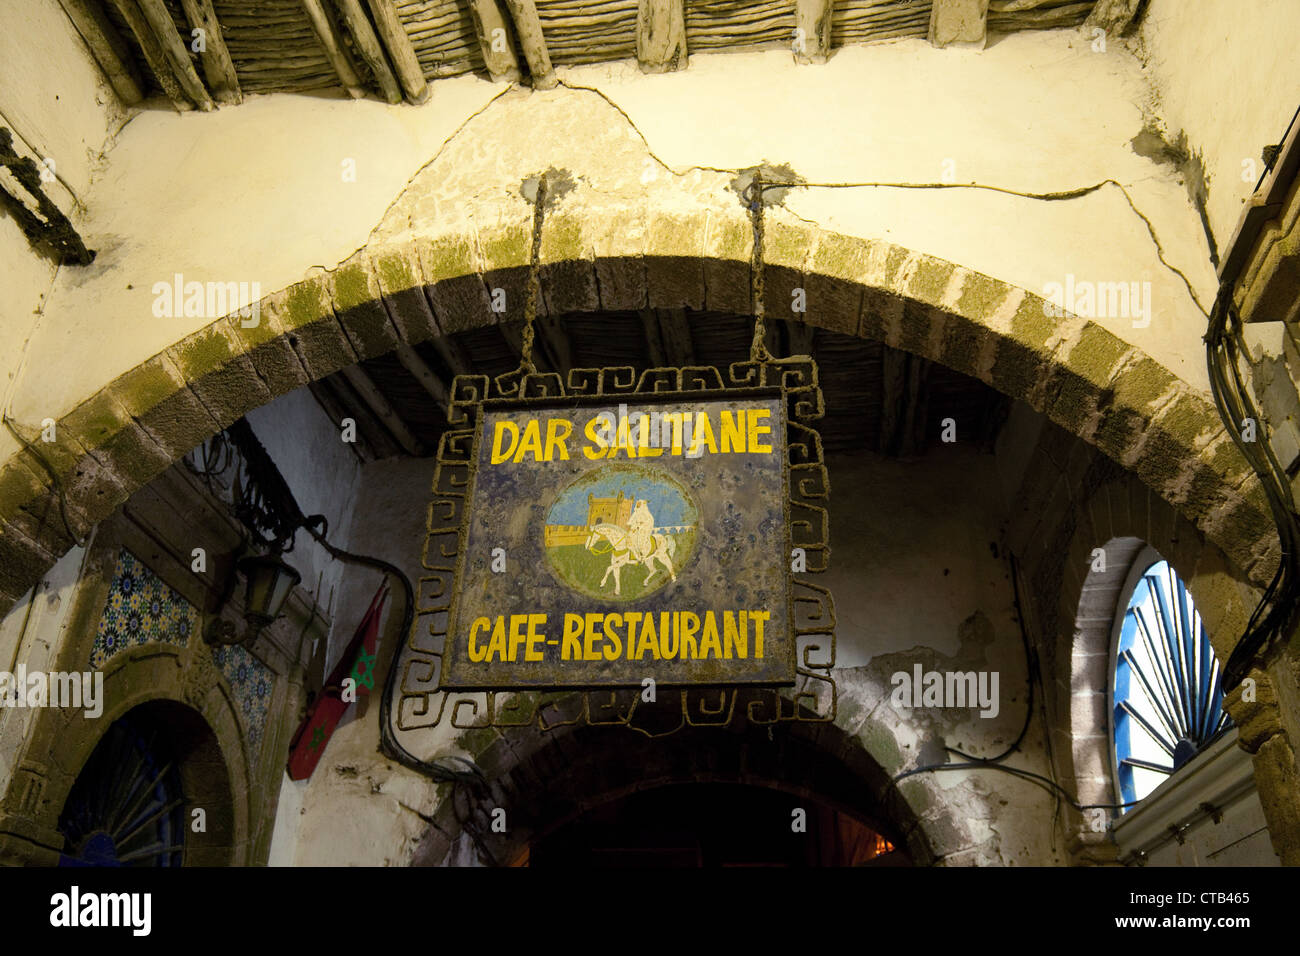 Sign to the Cafe-restaurant Dar Saltane, the Medina, Essaouira, Morocco Africa Stock Photo